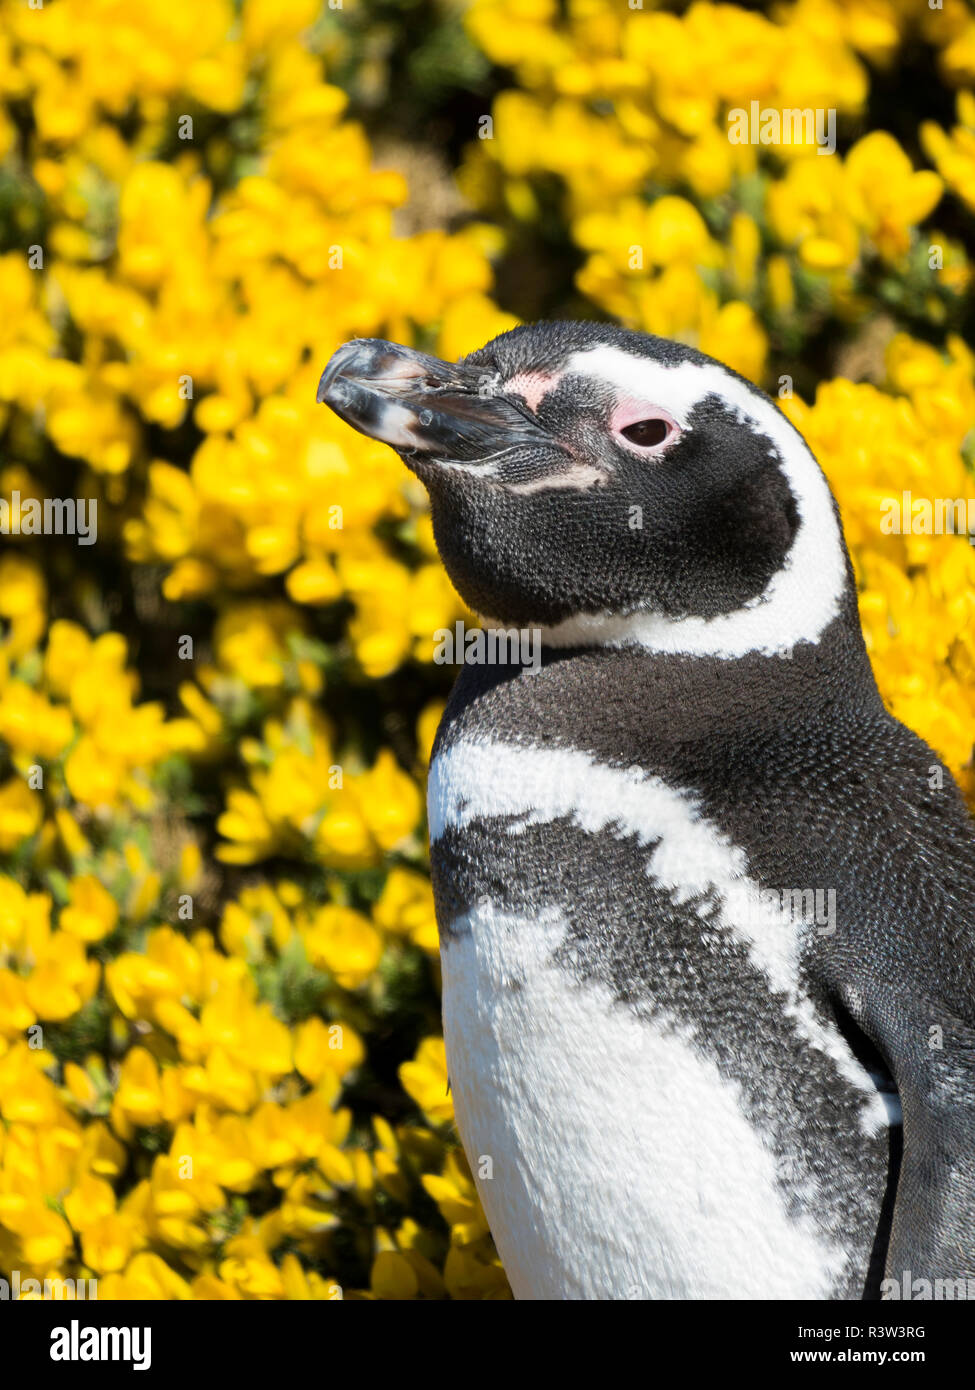 Magellanic Penguin (Spheniscus Magellanicus) am Fuchsbau vor gelb blühenden Ginster. Südamerika, Falkland Inseln Stockfoto